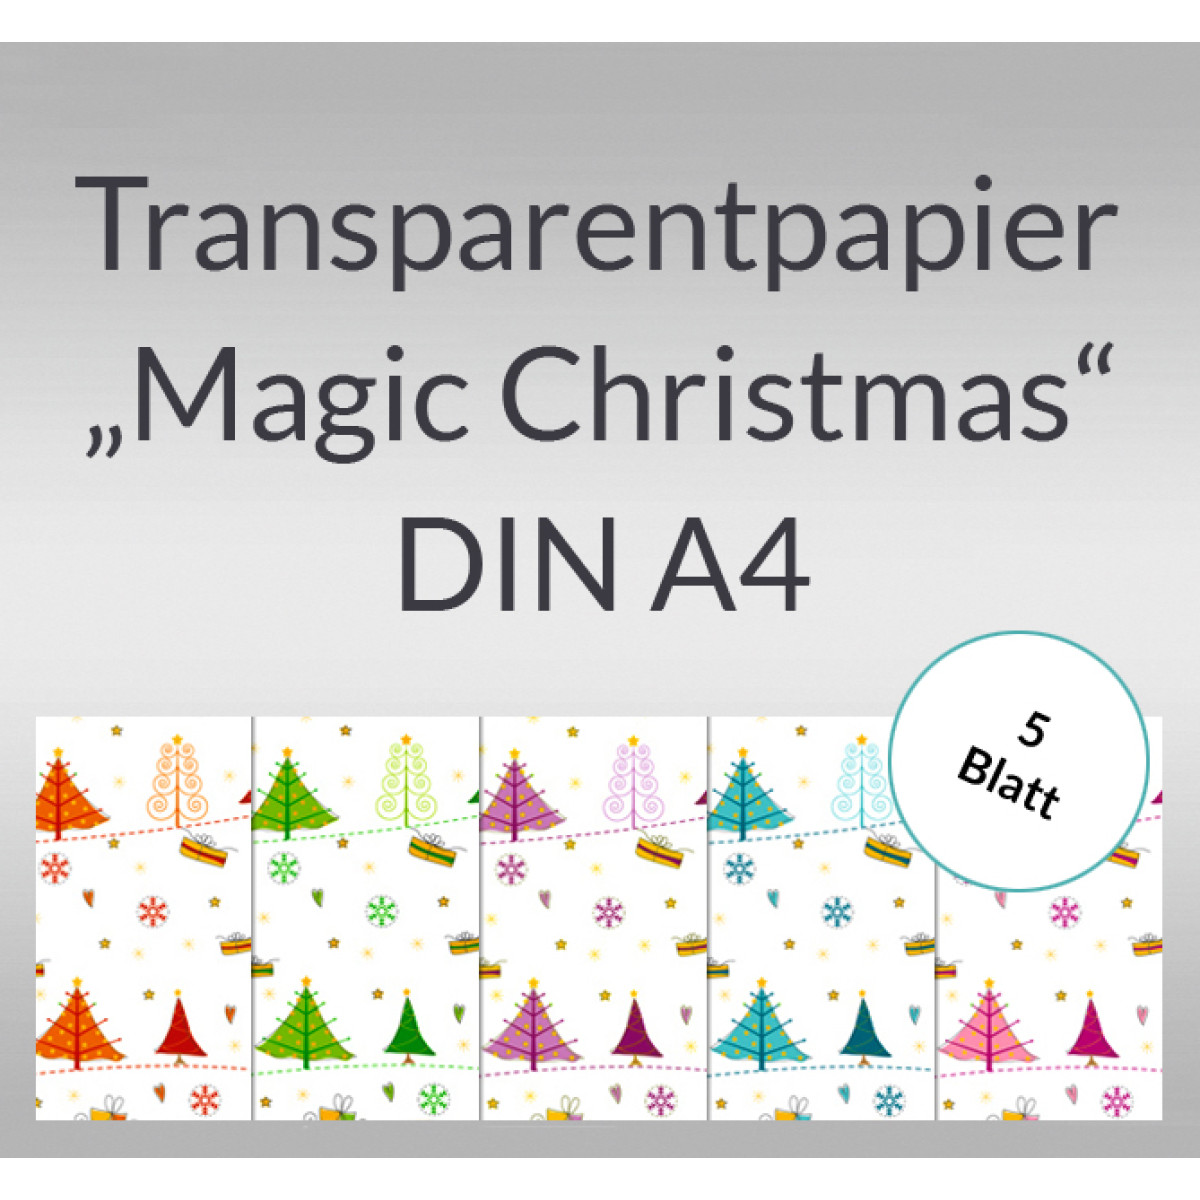 Transparentpapier "Magic Christmas" DIN A4 - 5 Blatt